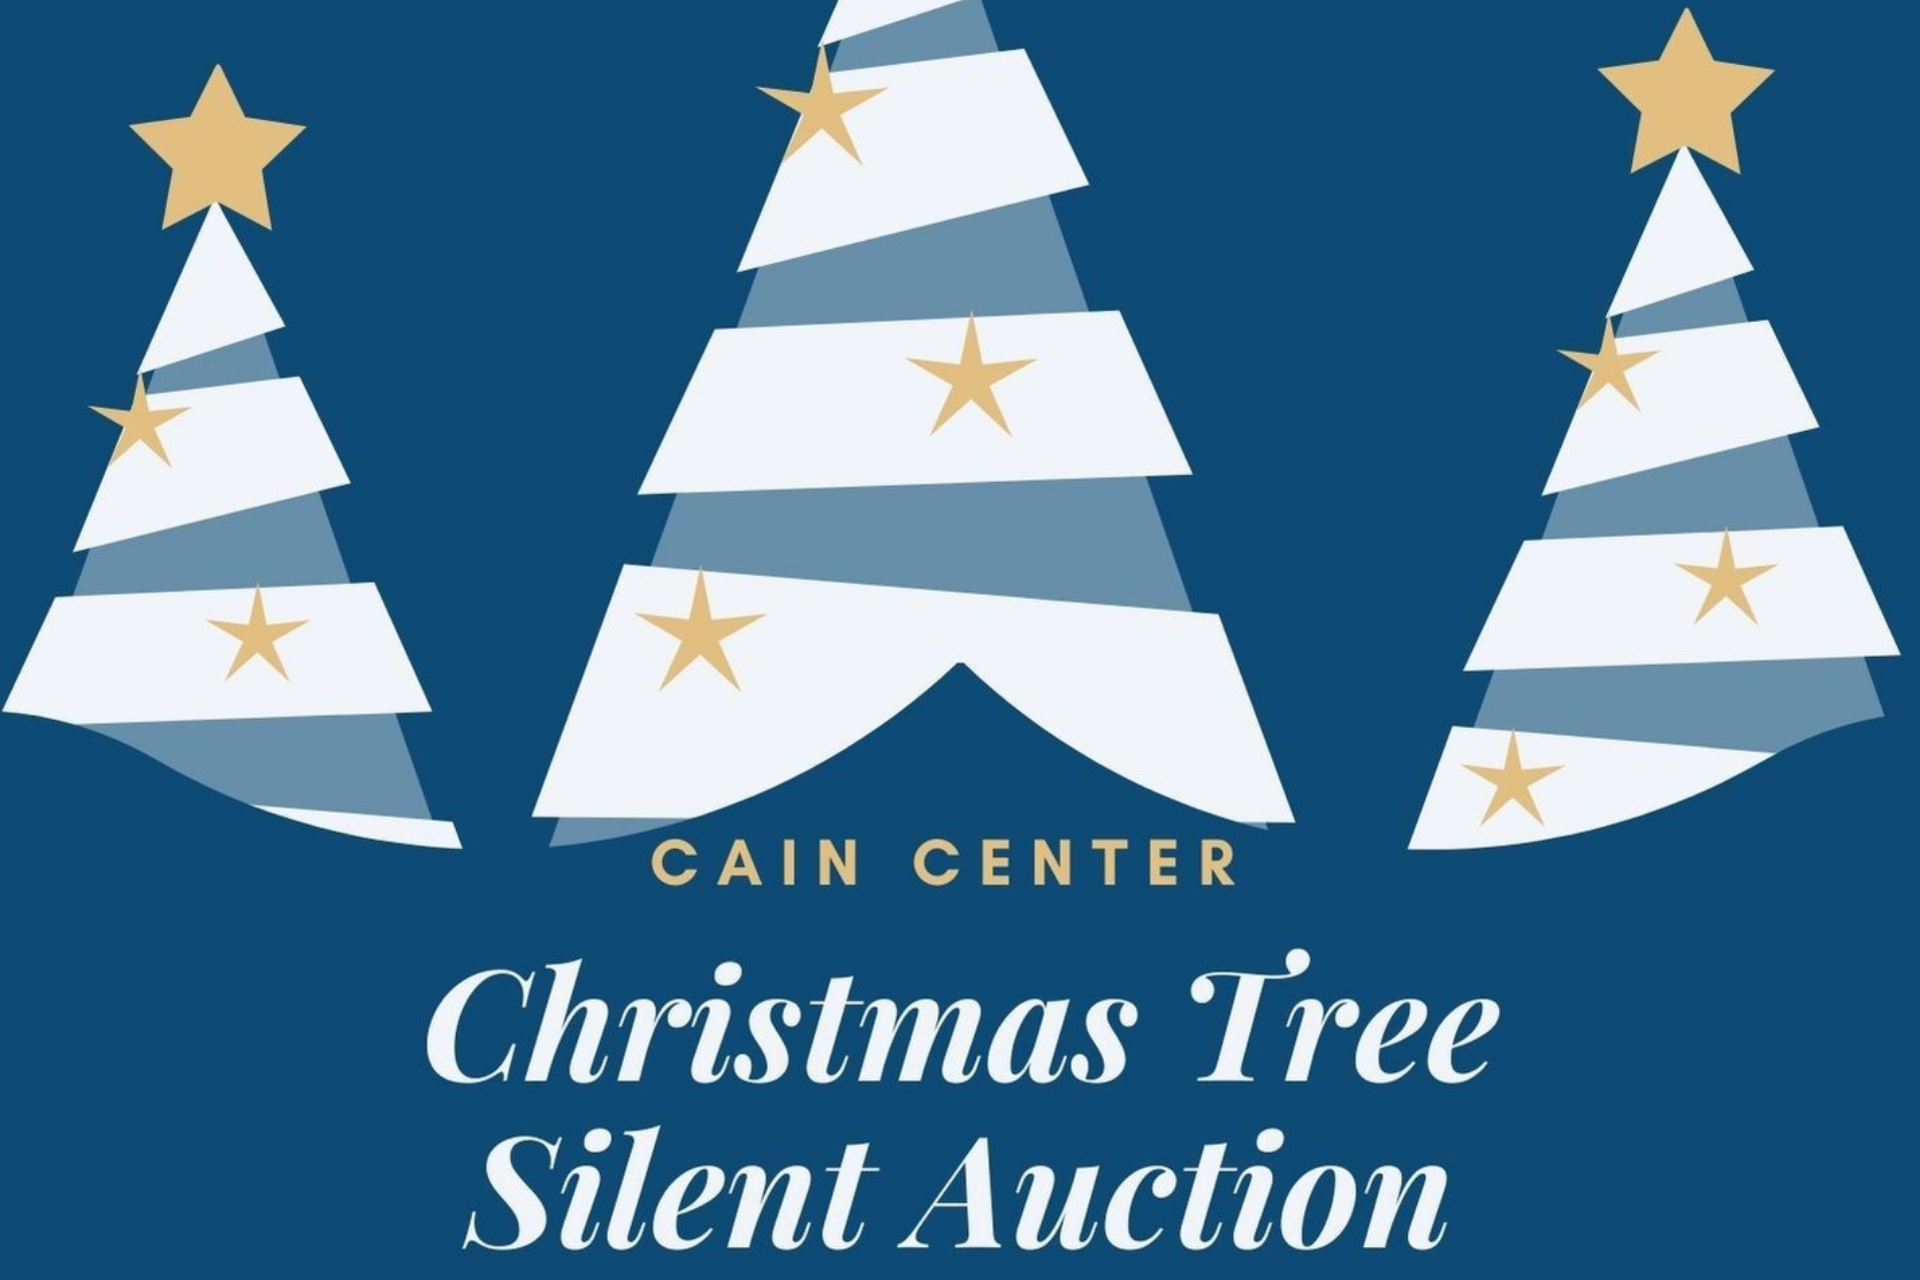 Cain Center Christmas Tree Silent Auction